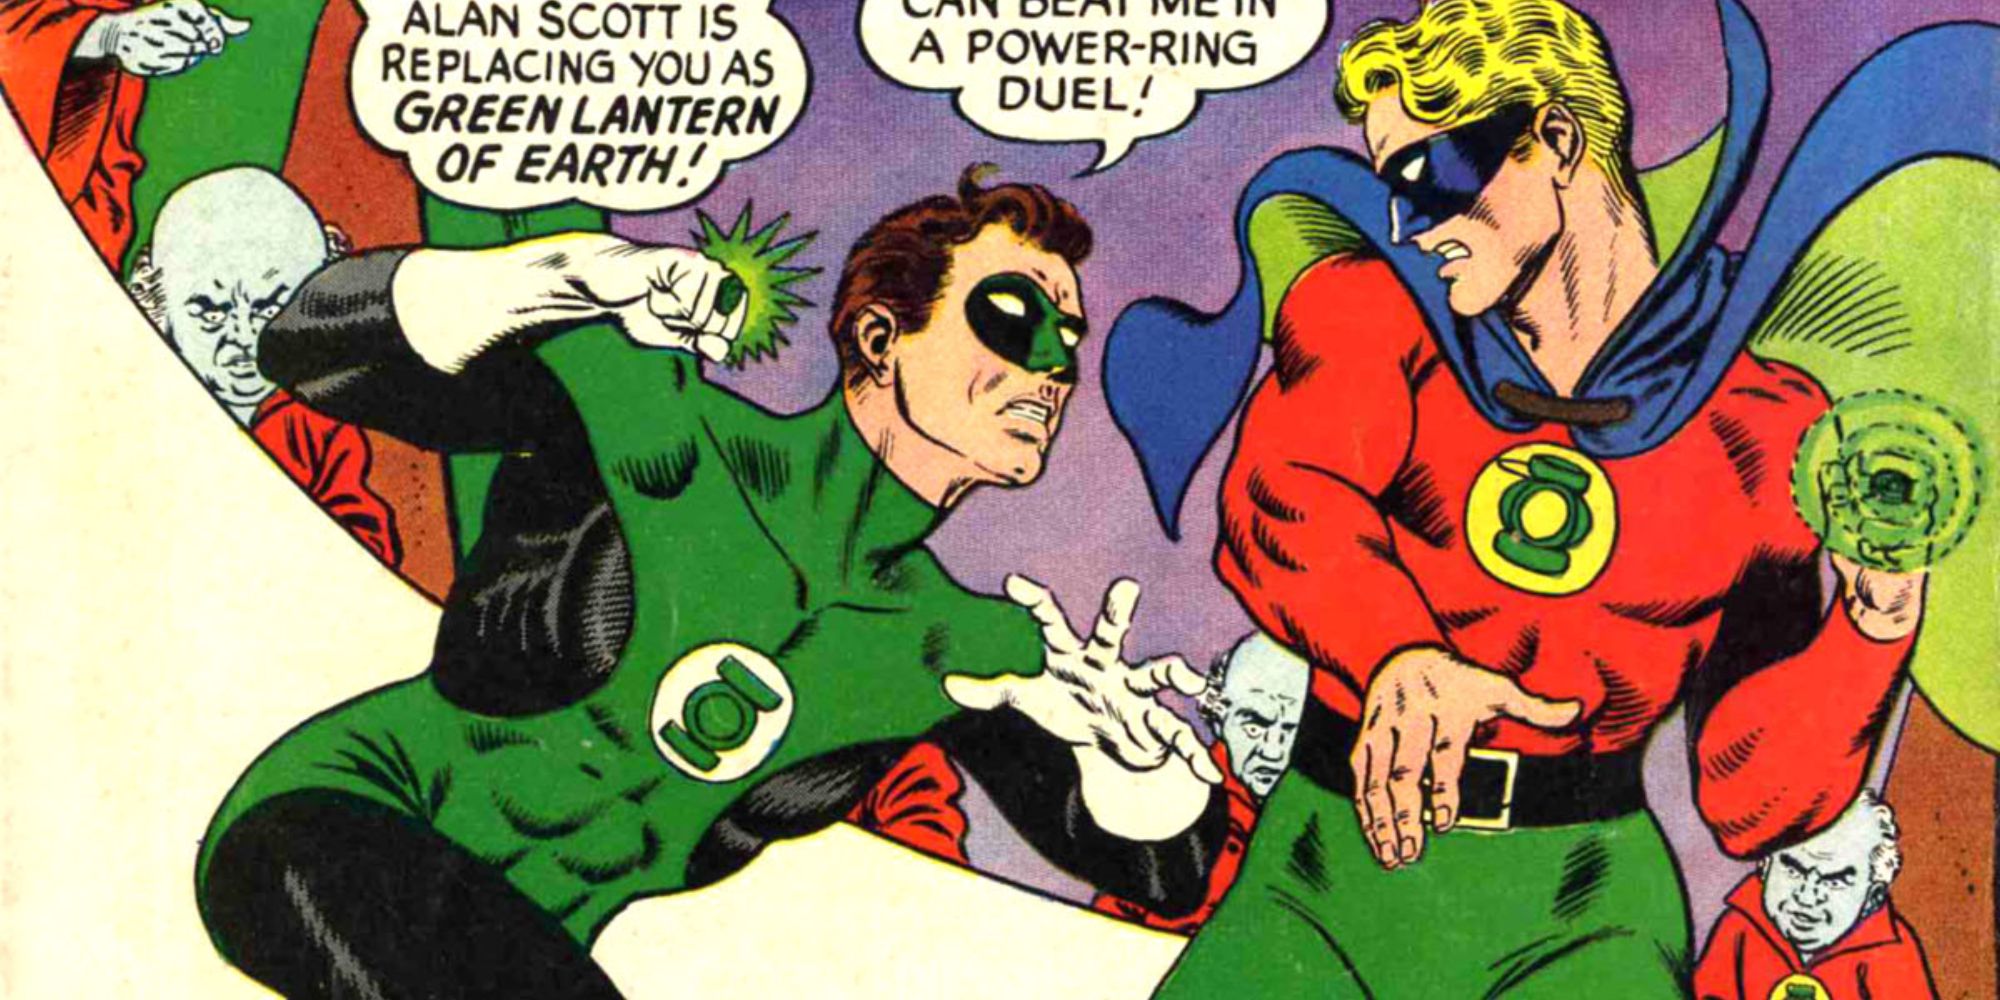 Hal Jordan fights Alan Scott in Green Lantern comics.